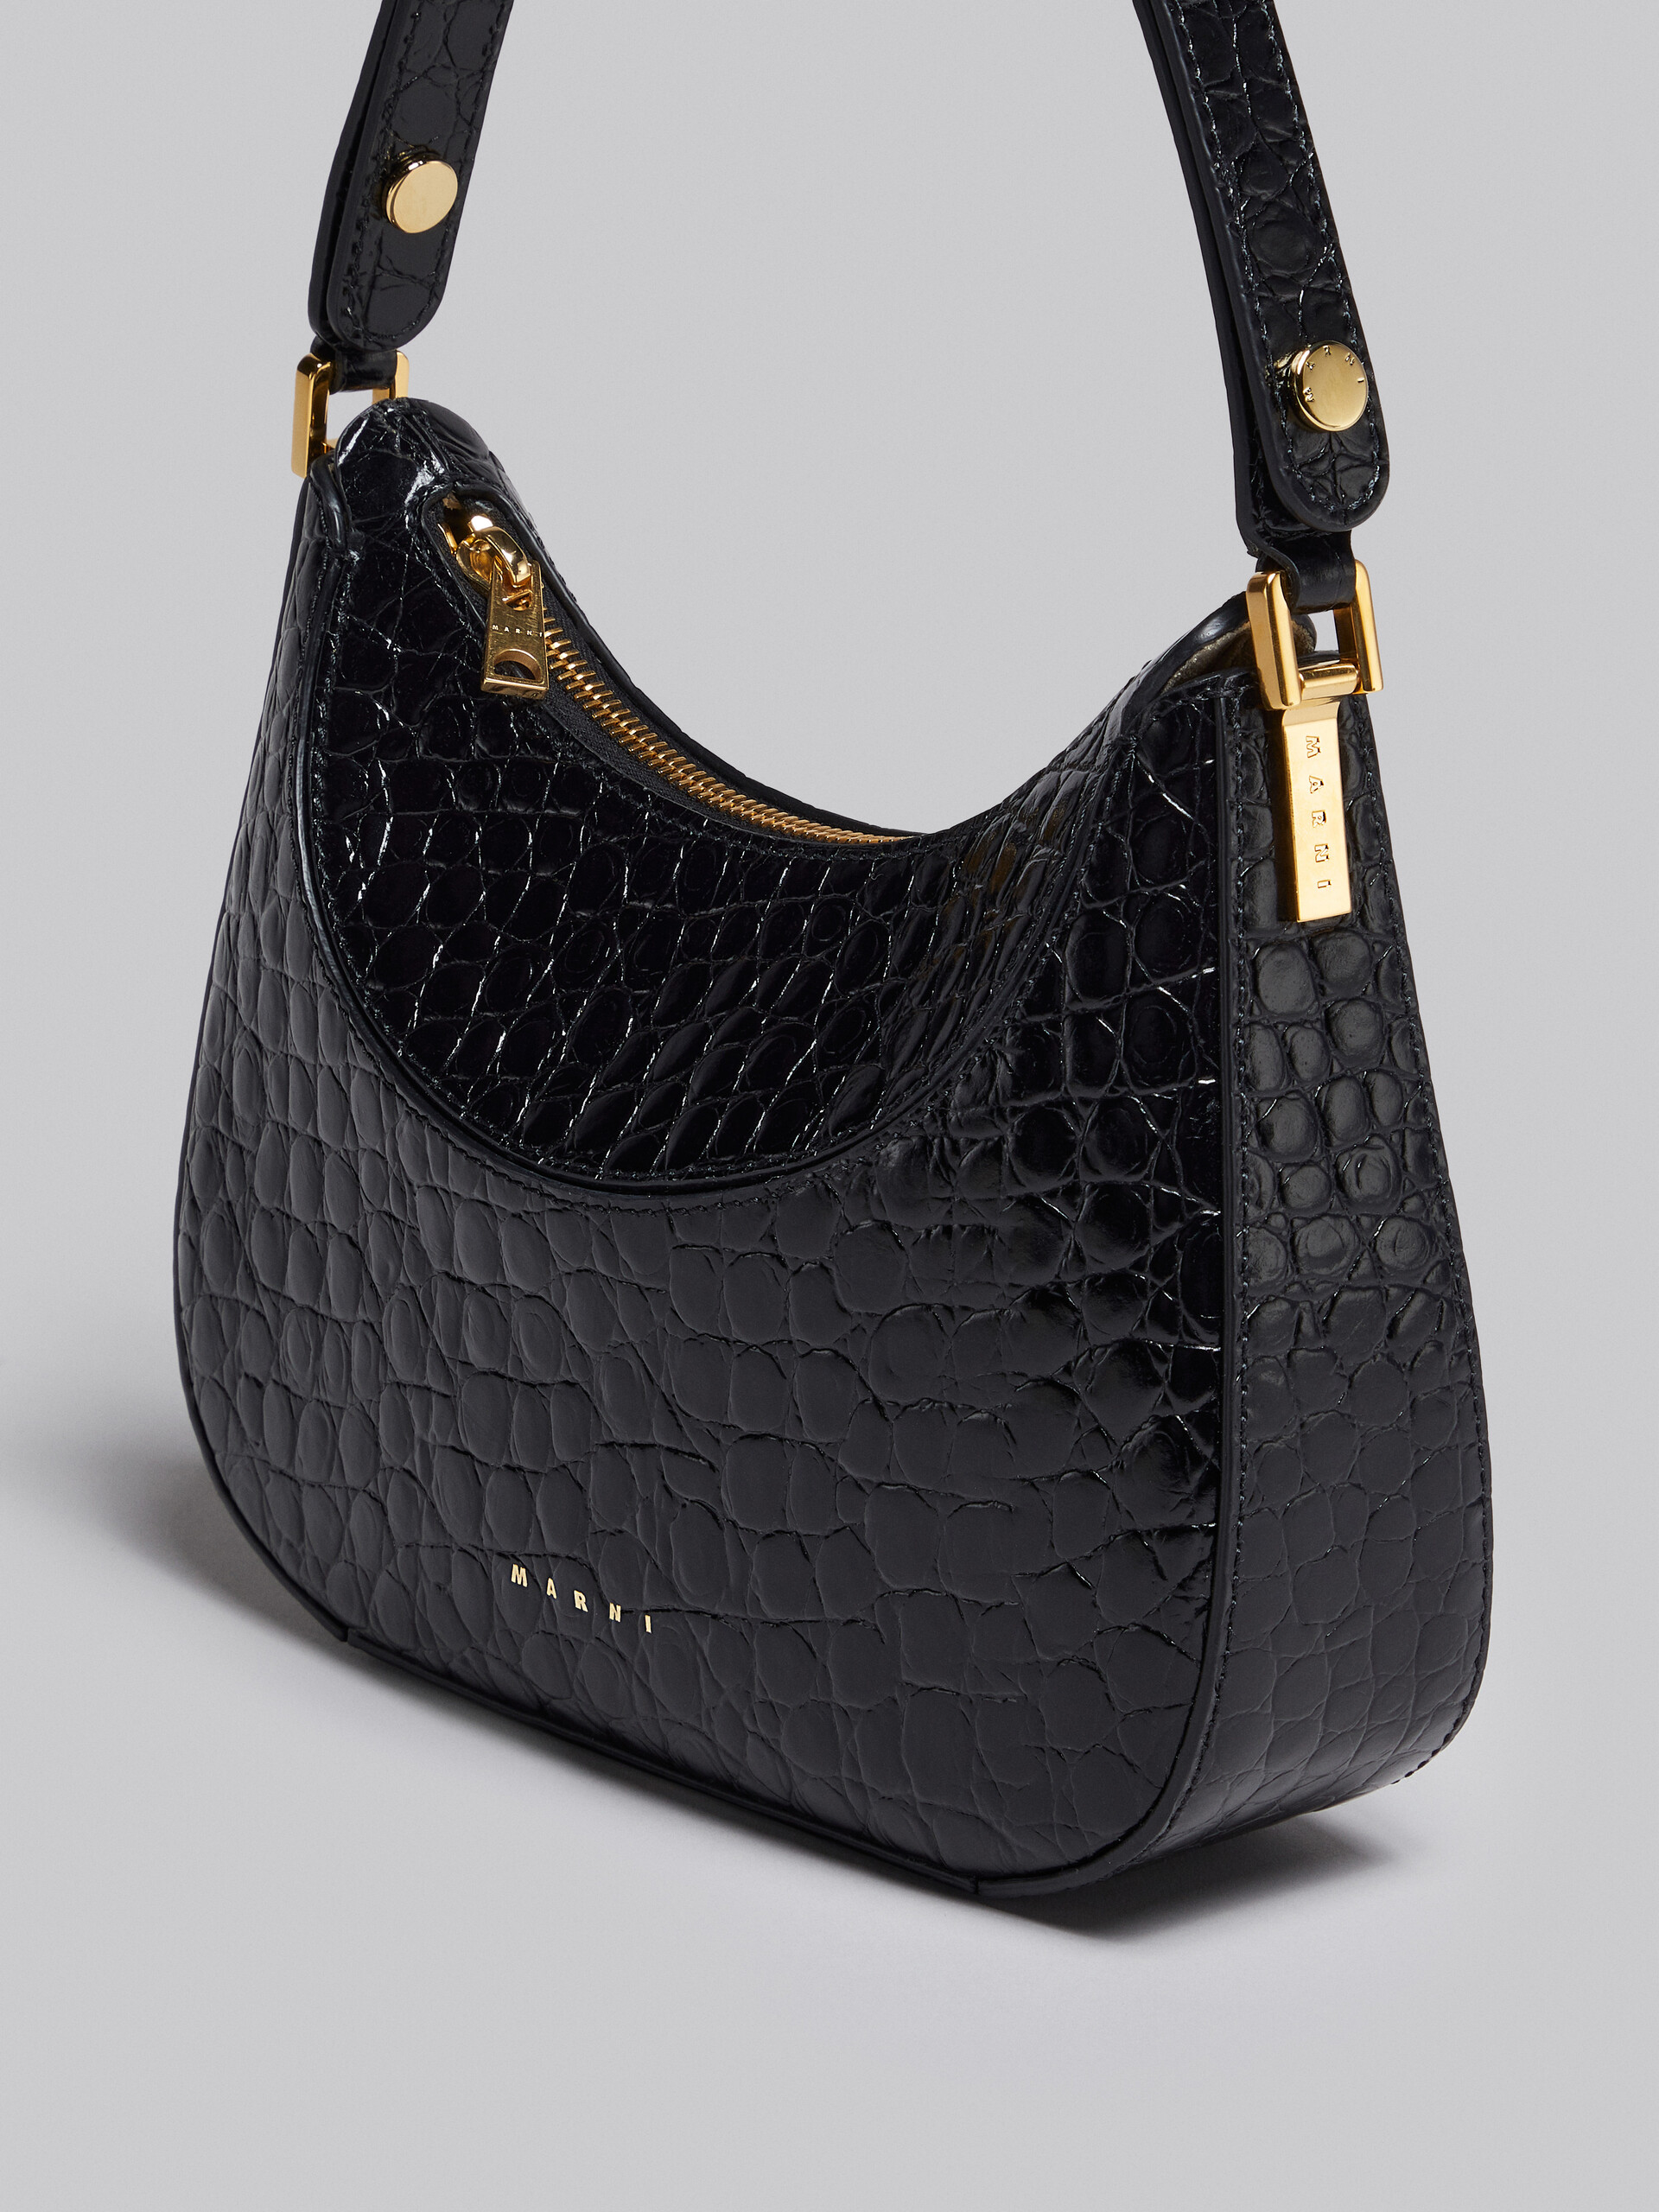 Milano Mini Bag in black croco print leather - Handbags - Image 4